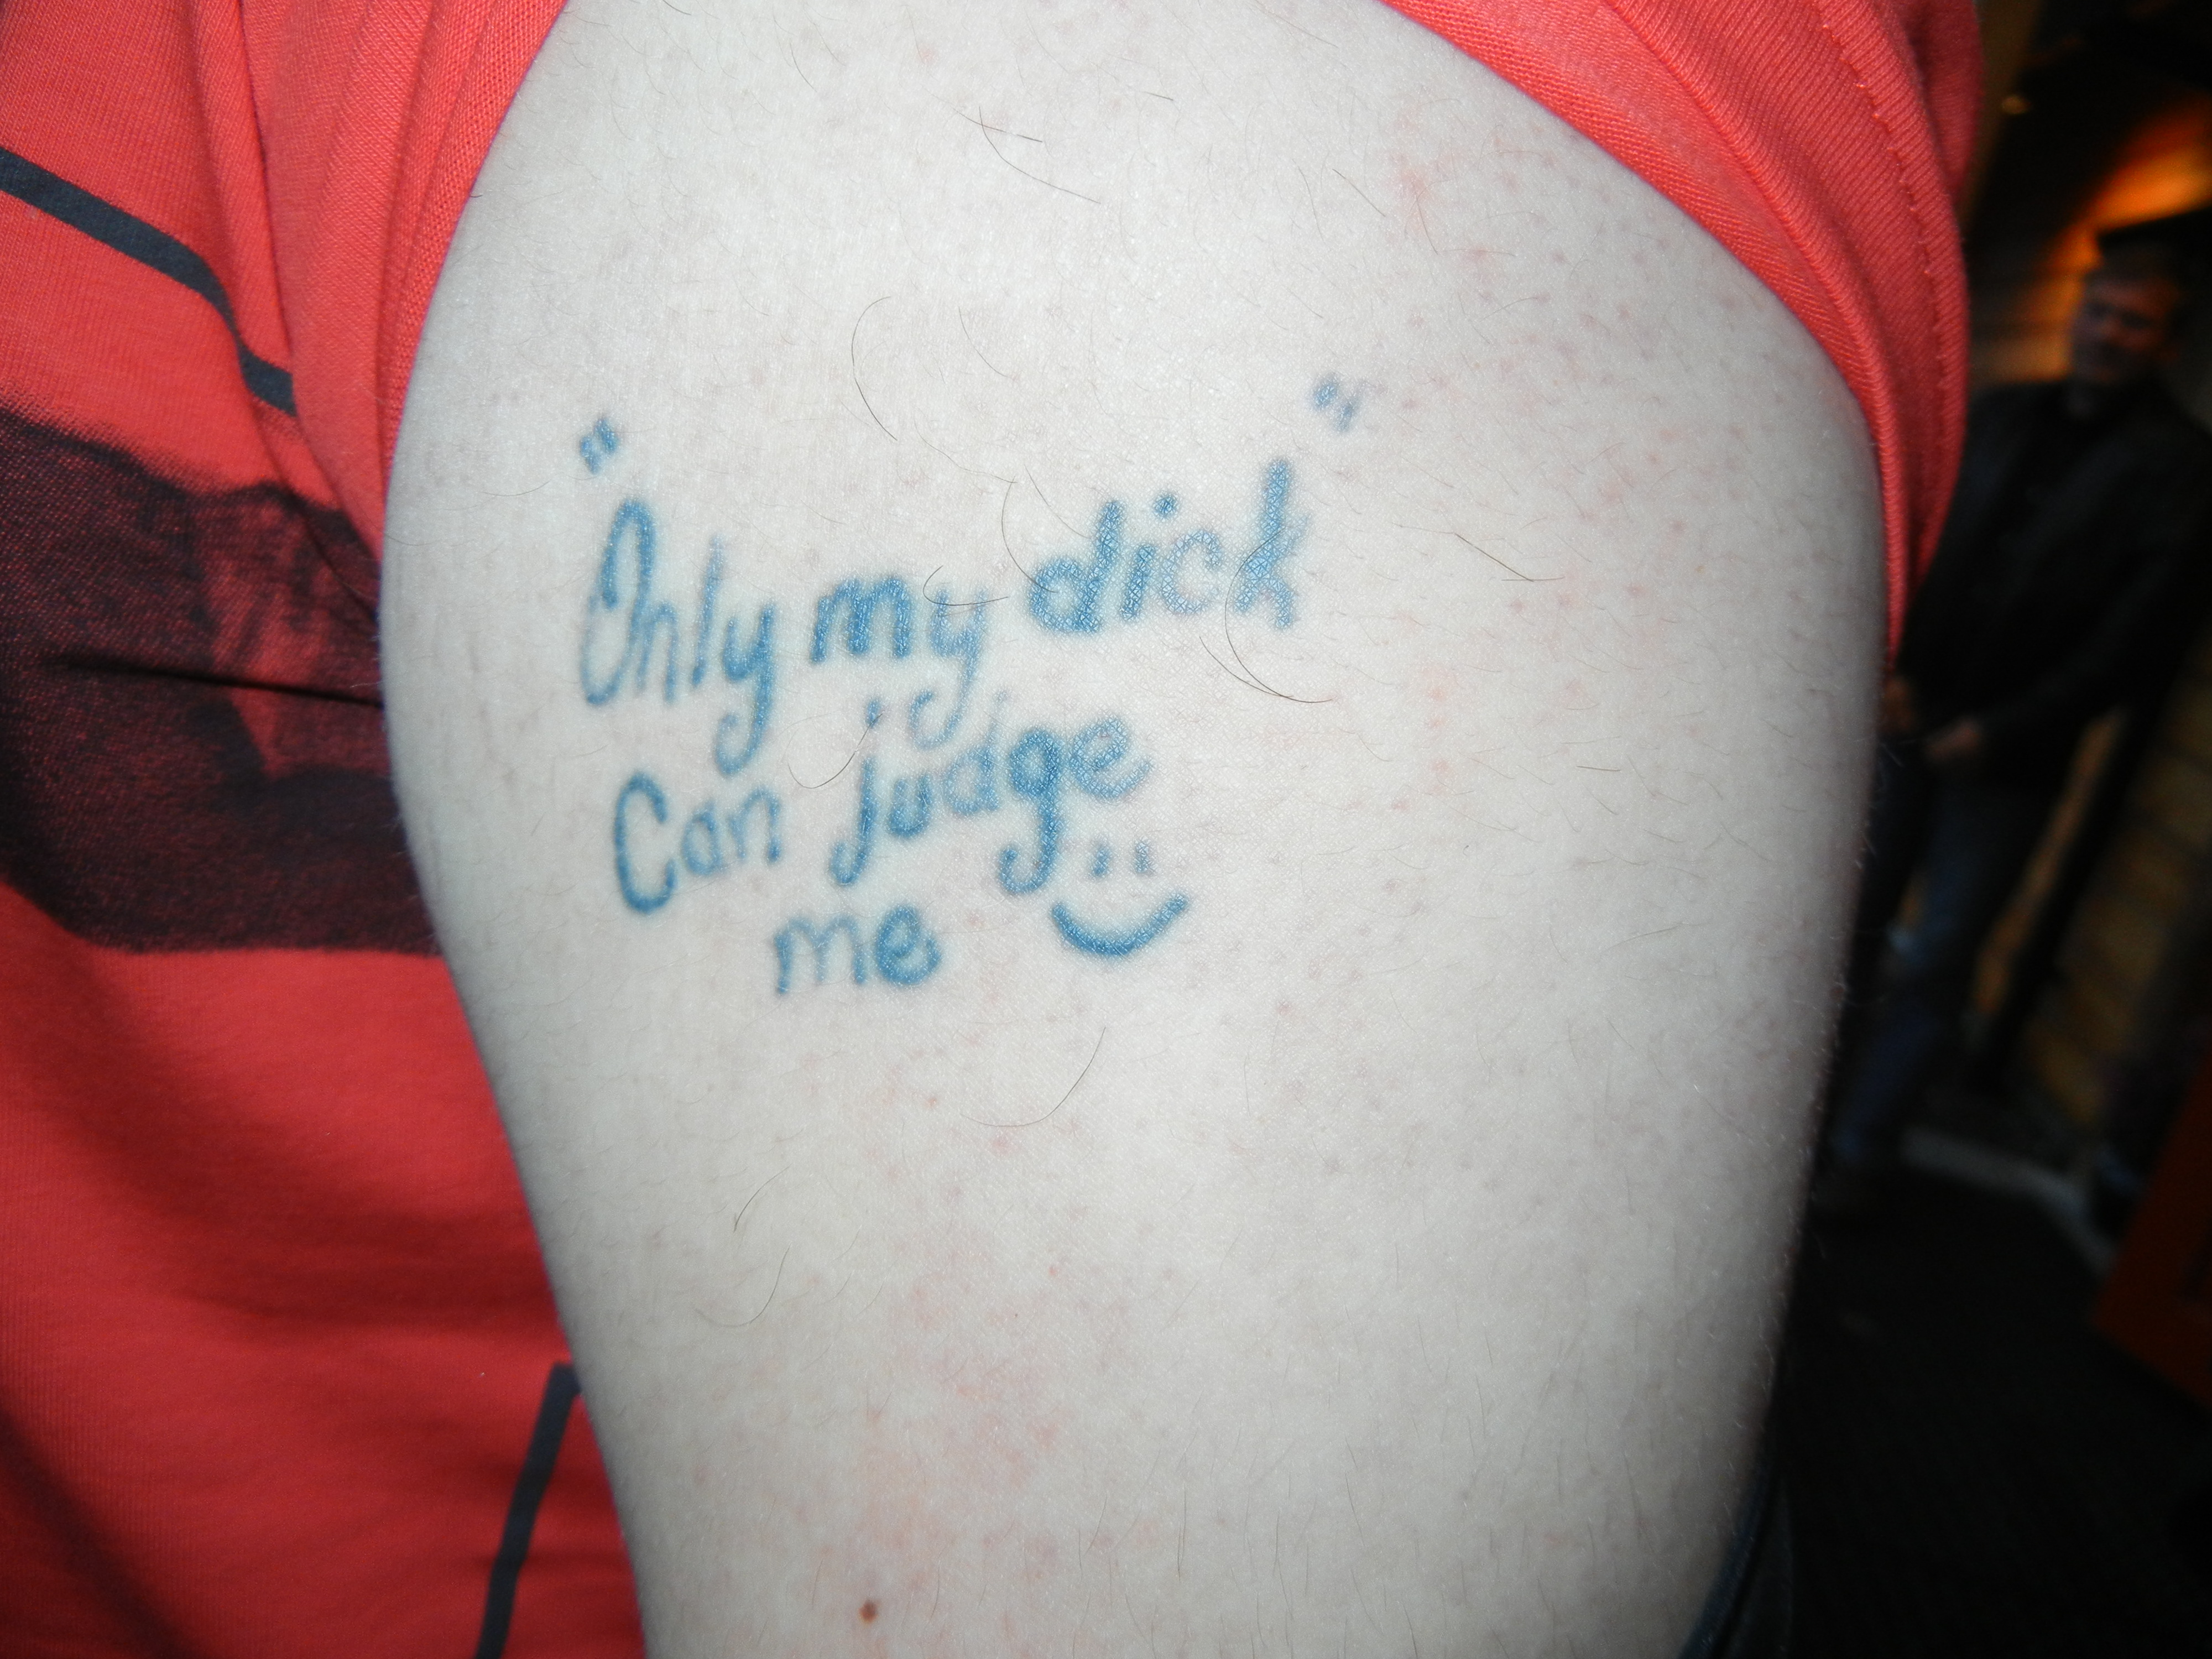 dick can judge me tattoo